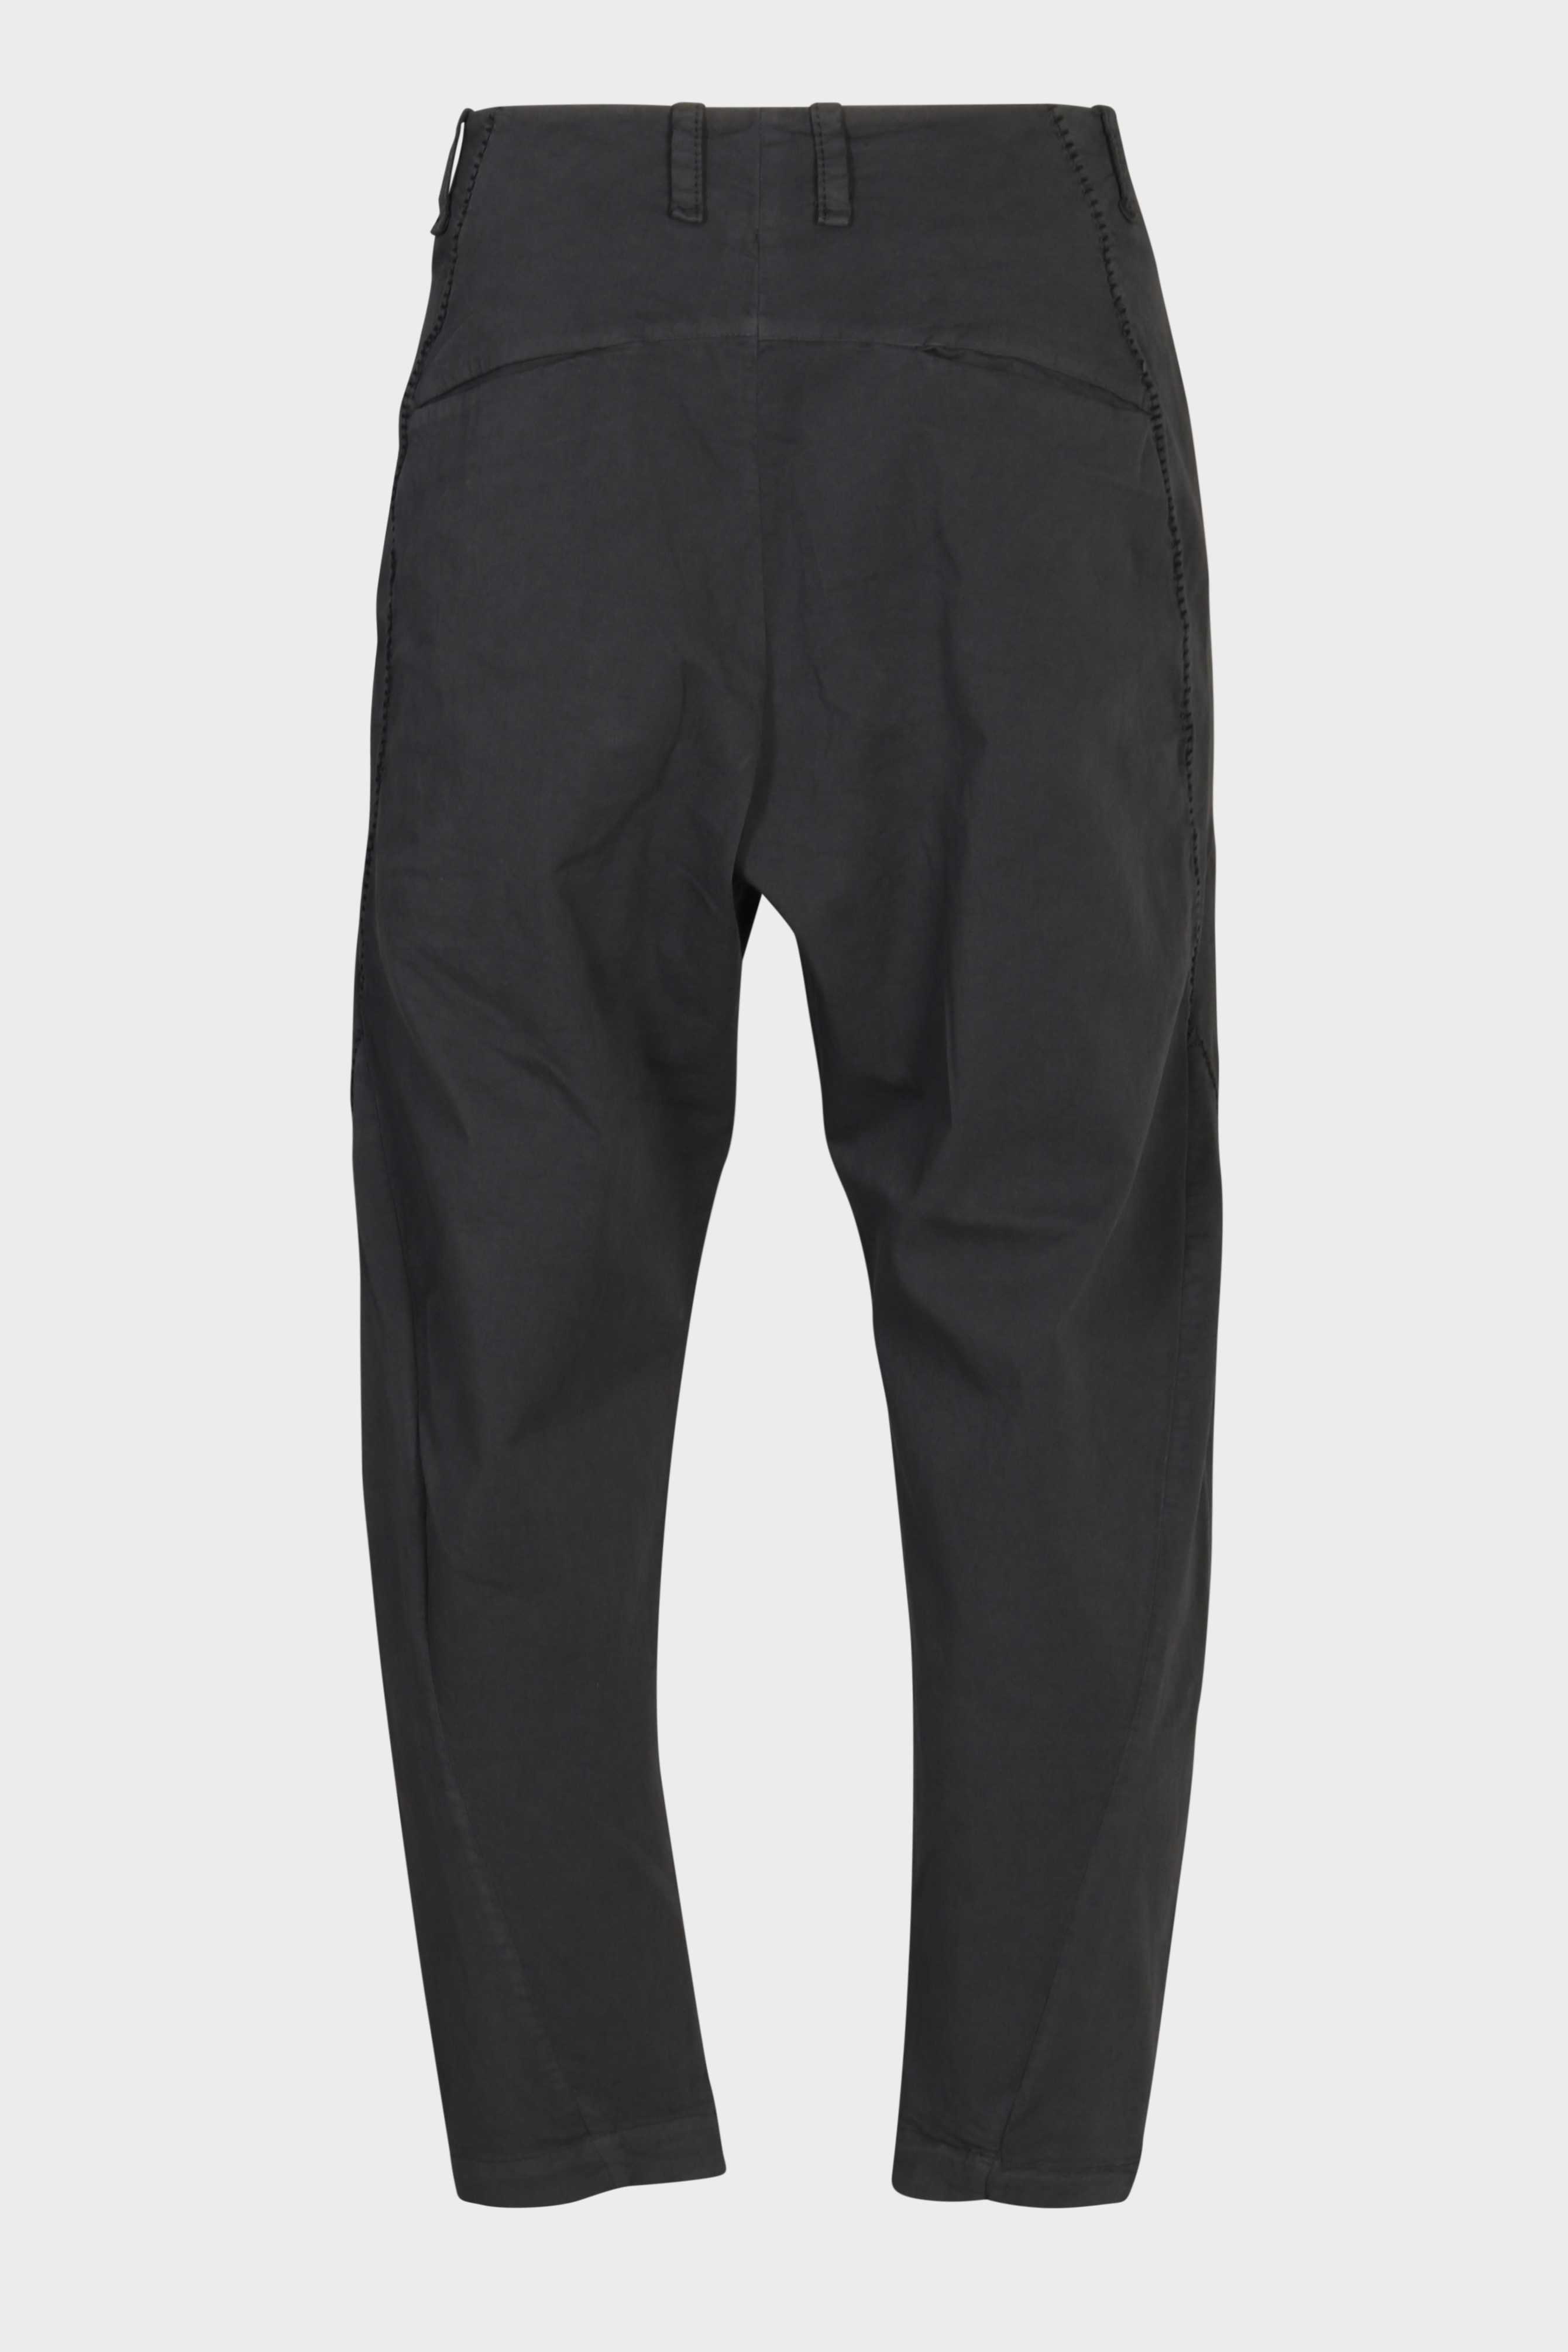 TRANSIT UOMO Cotton Stretch Pant in Dark Grey S